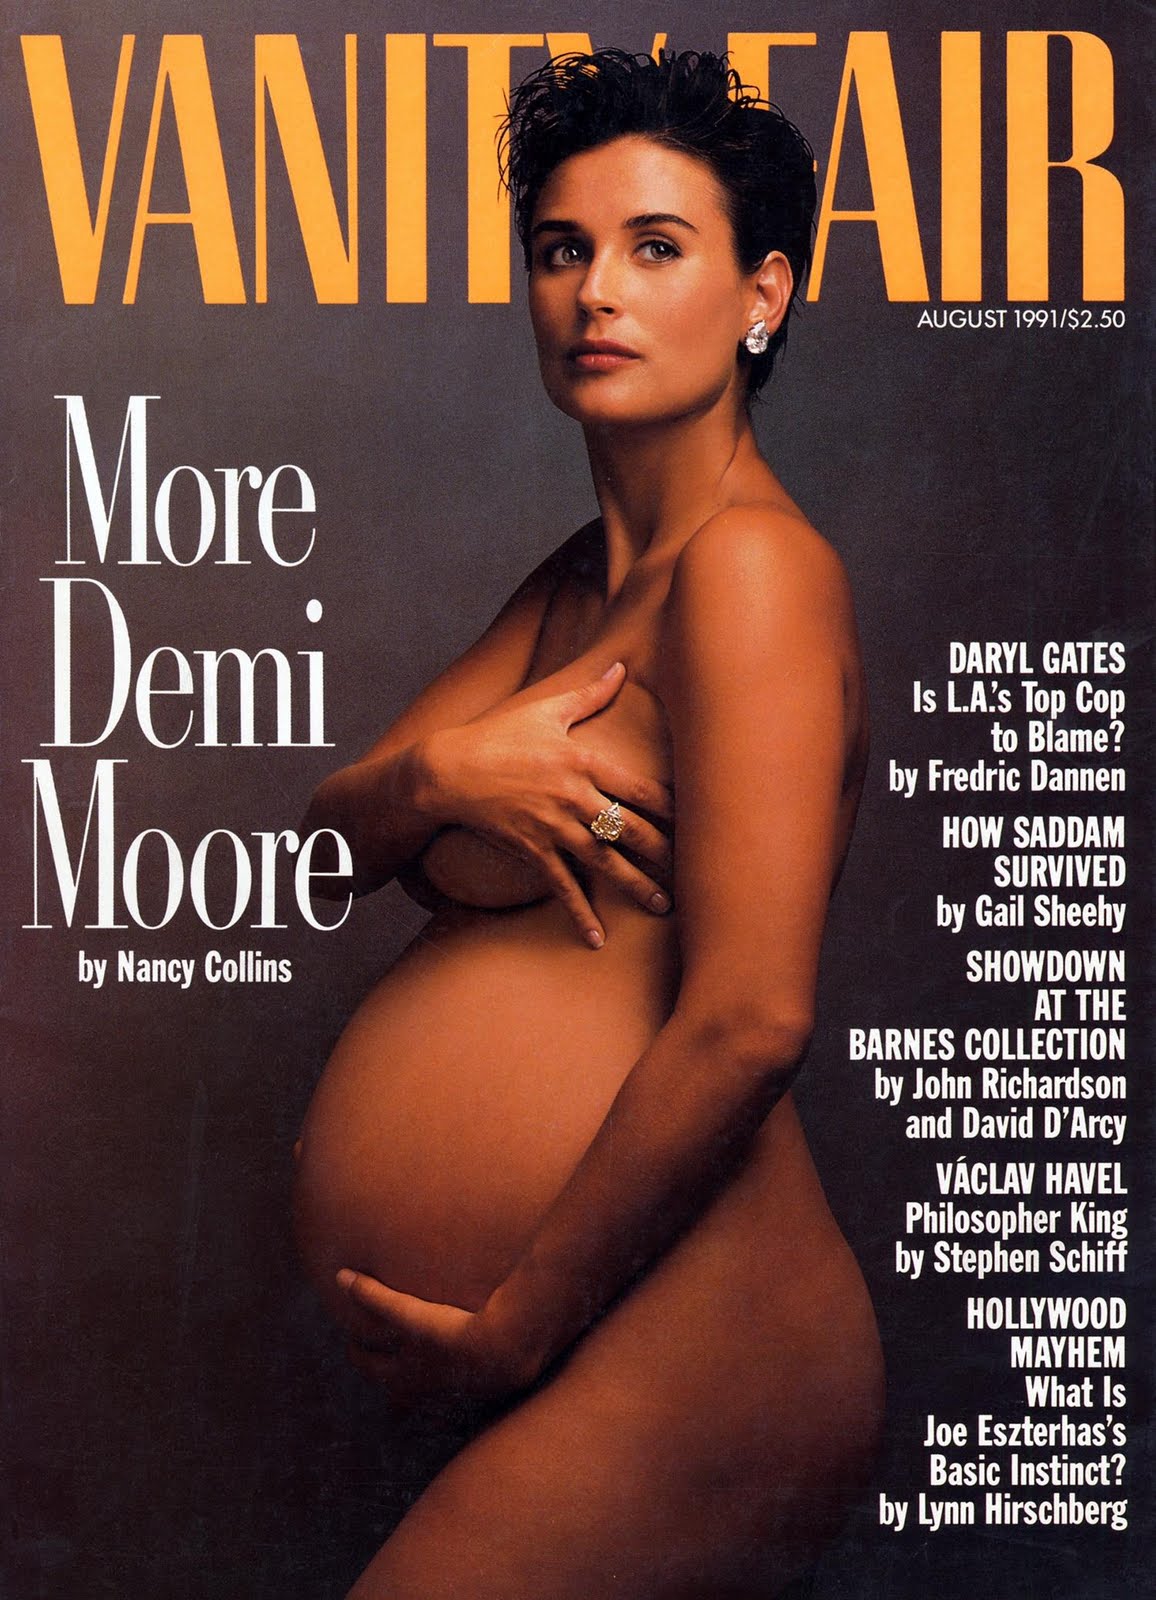 http://4.bp.blogspot.com/-yv7v4FL5WA4/T94JiZ13UPI/AAAAAAAAA9k/iz_Q6shsyu4/s1600/annie-leibovitz-demi-moore-nude-pregnant-vanity-fair-august-1991-cover-portrait.jpg